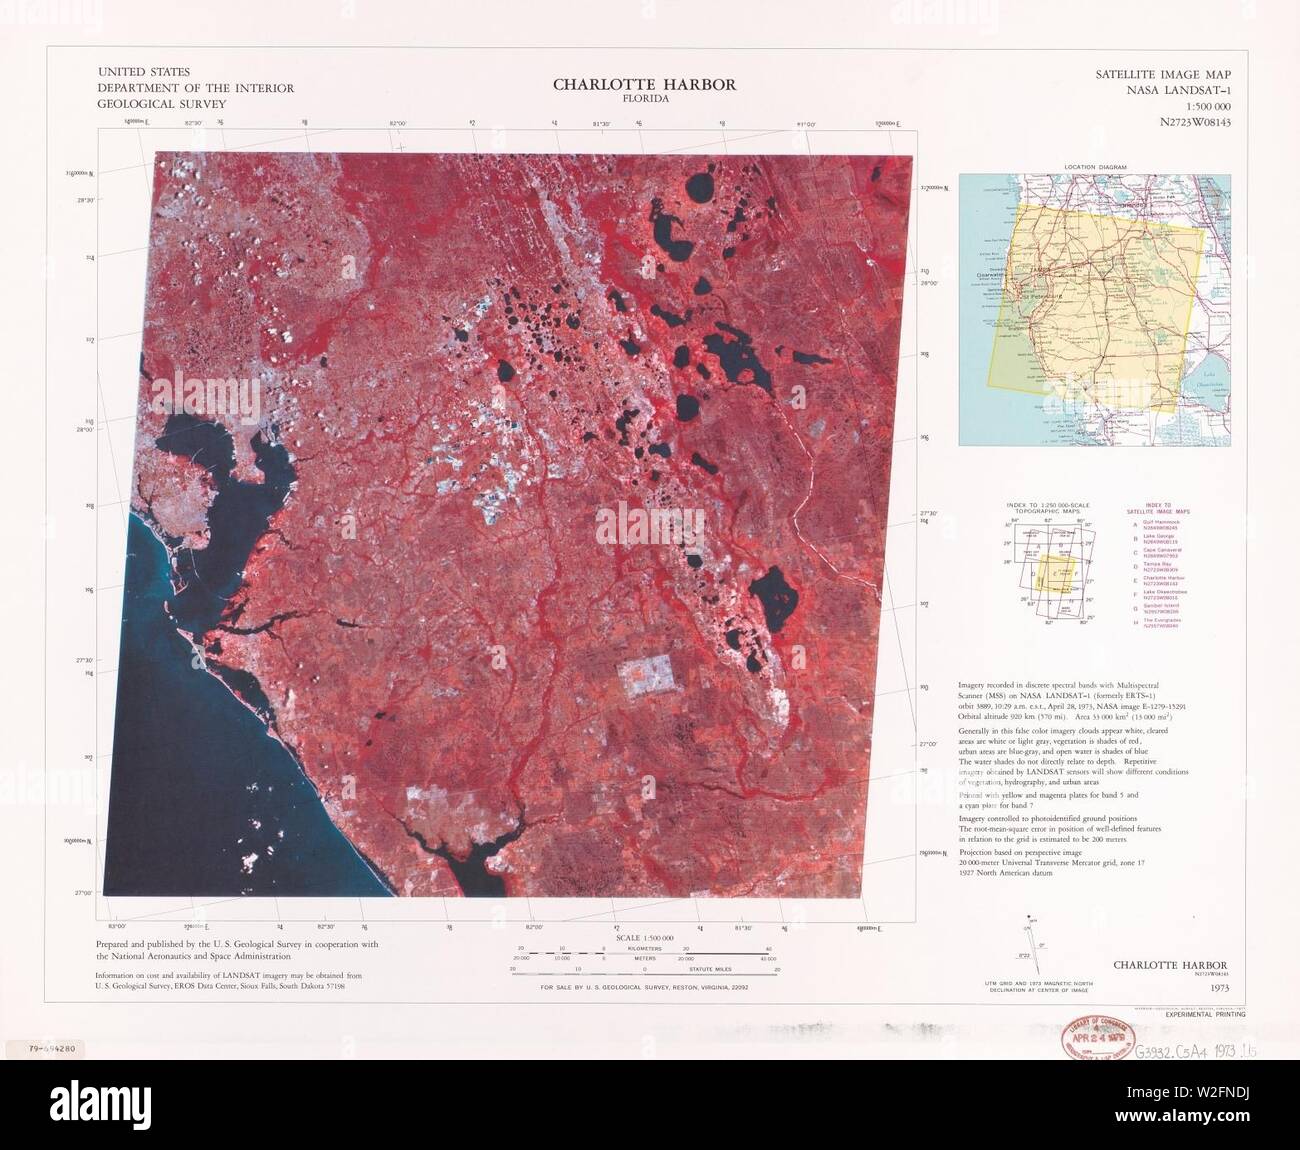 Charlotte Harbor, Florida, satellite image map - NASA LANDSAT-1, 1-500,000, N2723W08143 Stock Photo